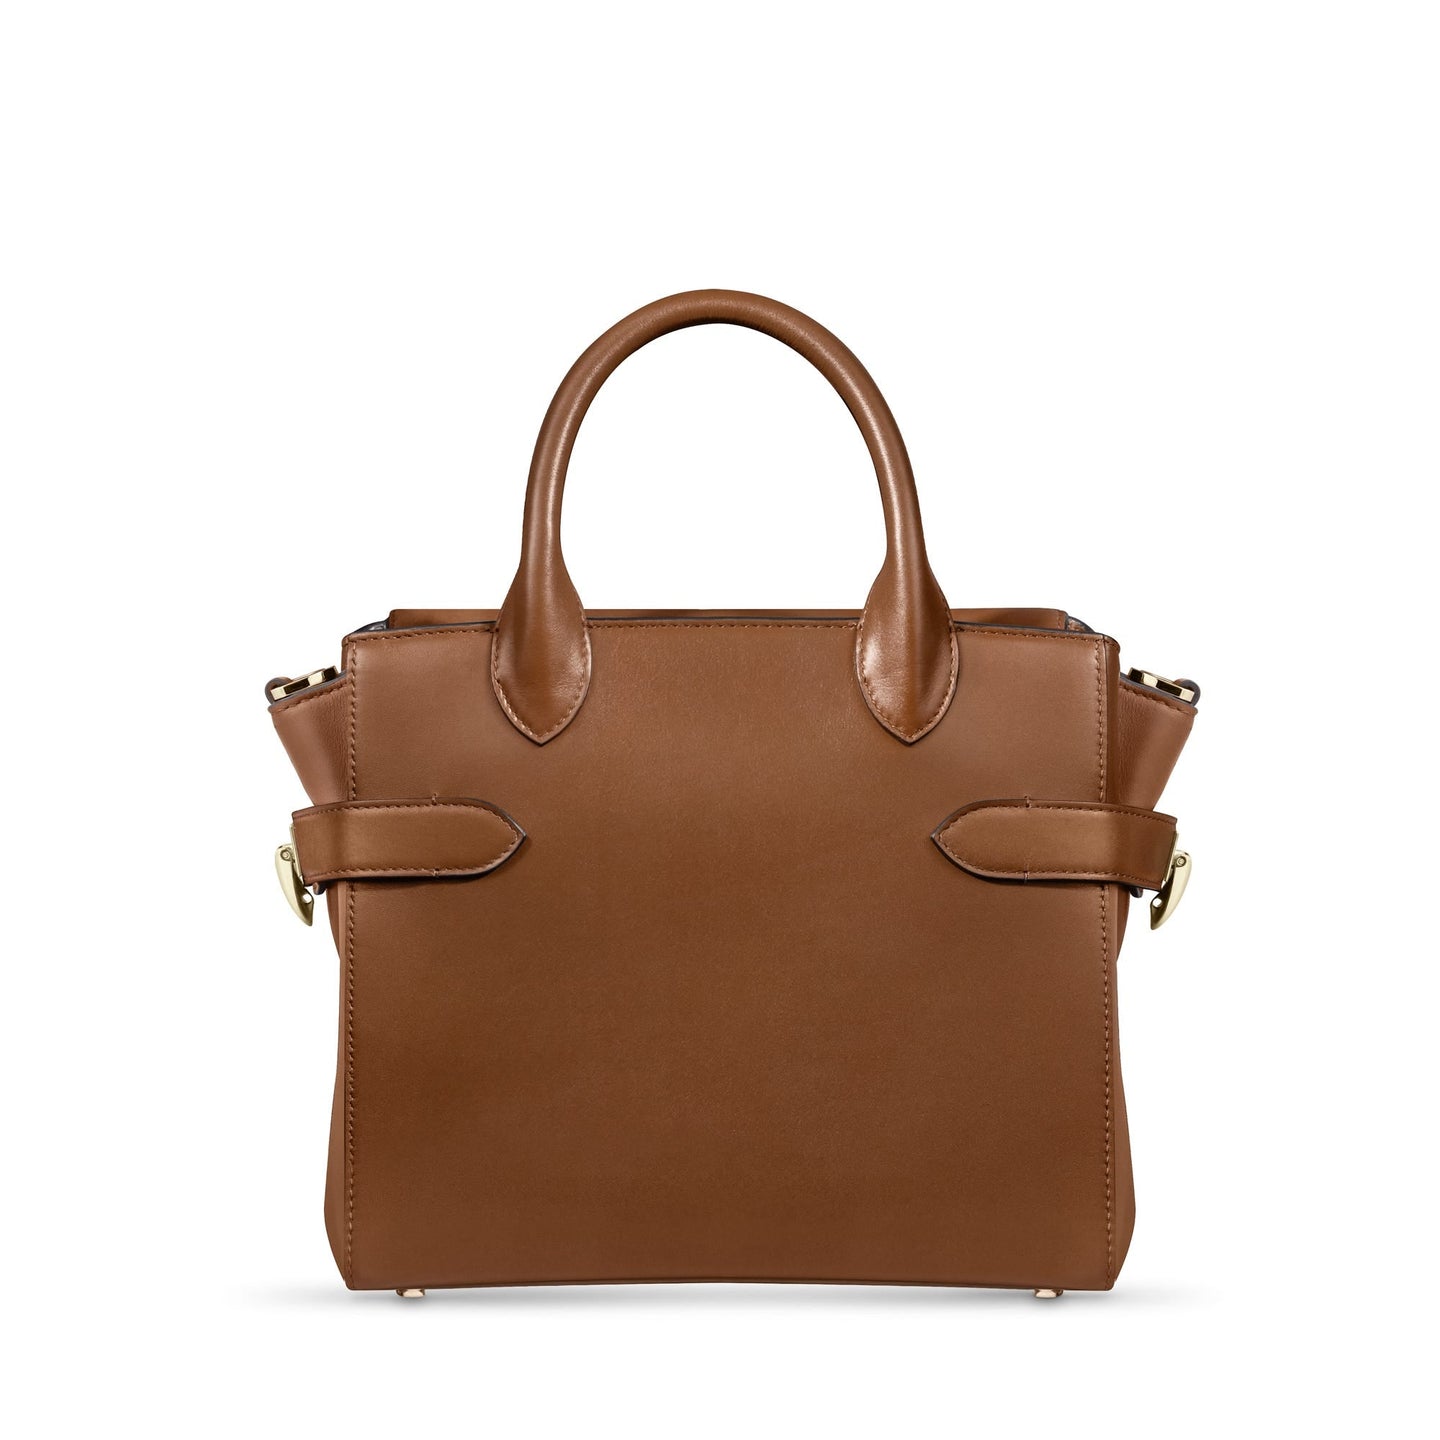 Taylor Square Handbag in Soft Leather